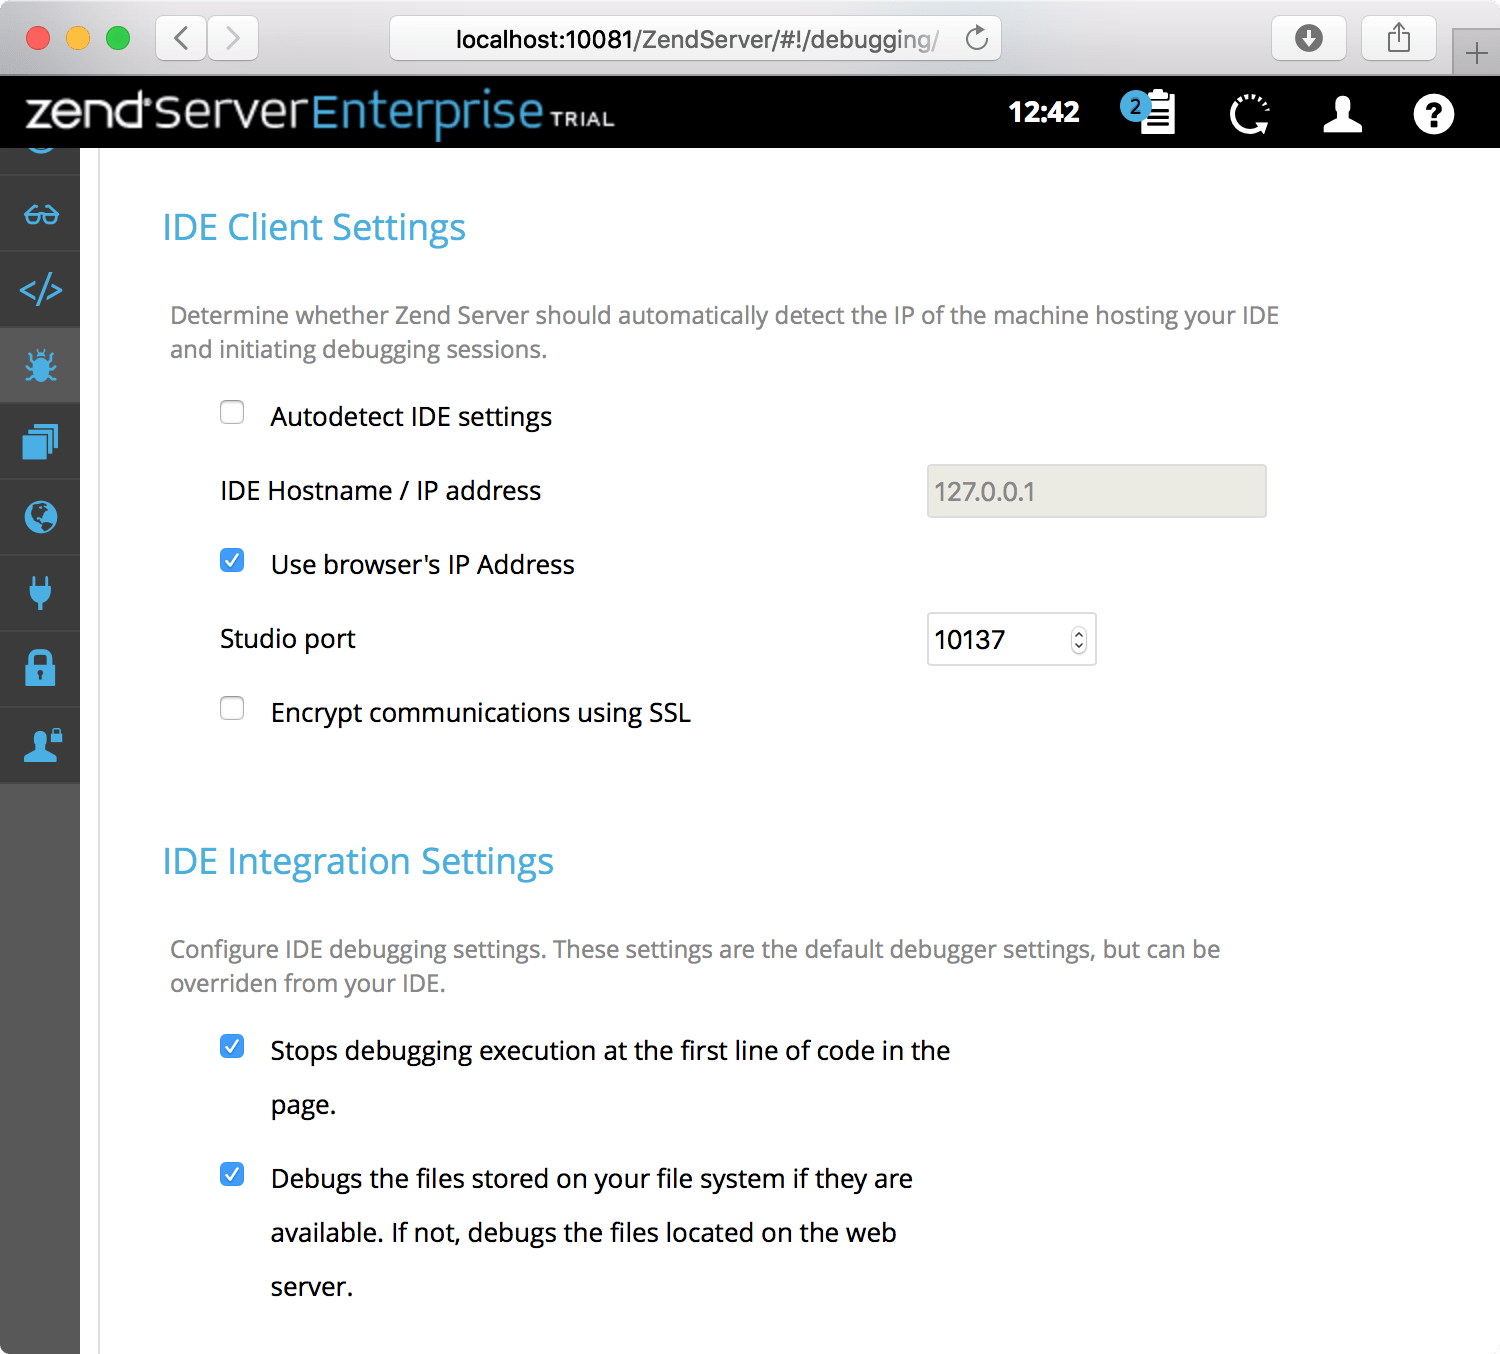 Additional IDE settings